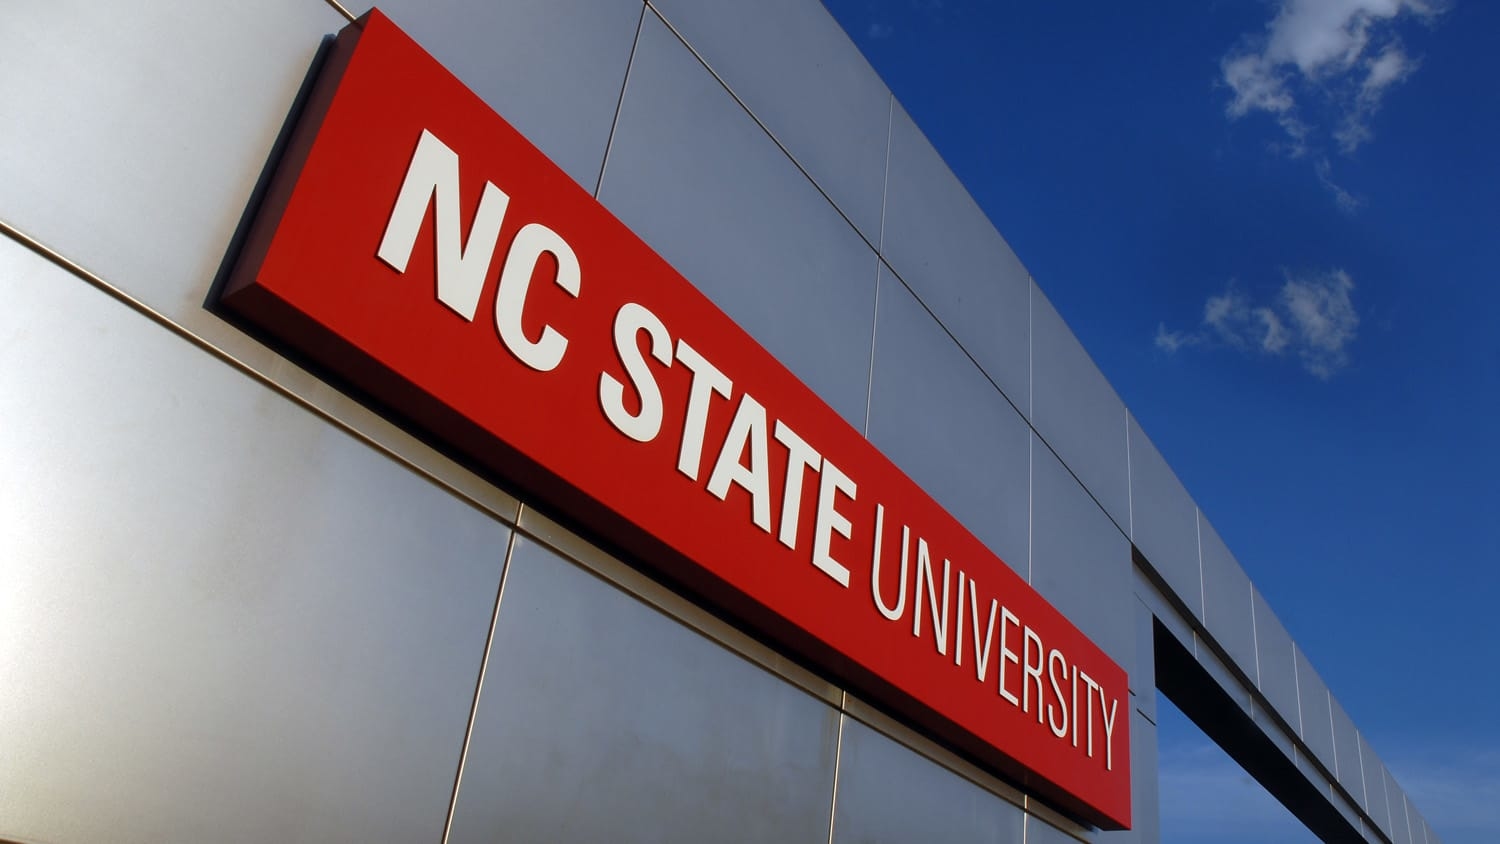 Campus gateway sign reading NC State University